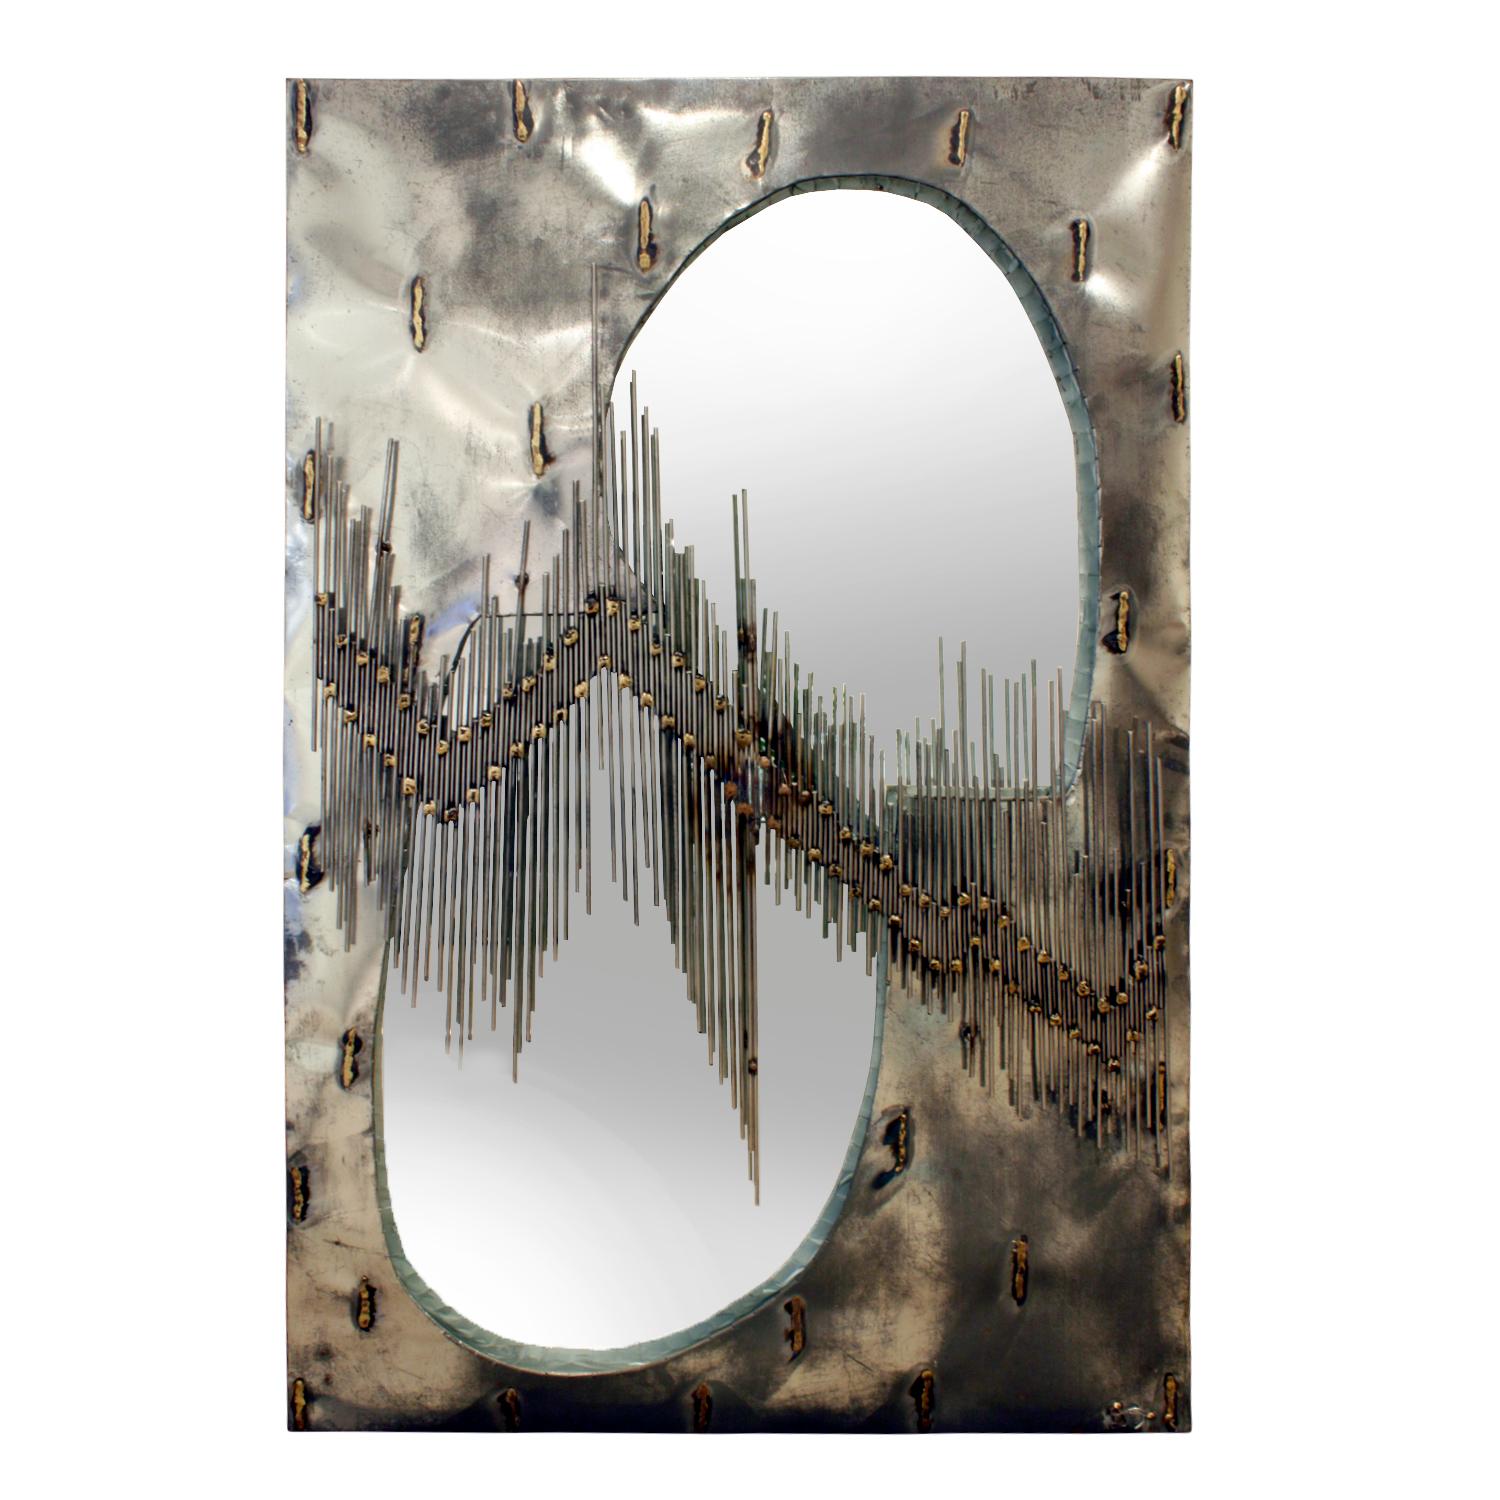 Brutalist Artisan Mirror with Welded Rods, 1970s